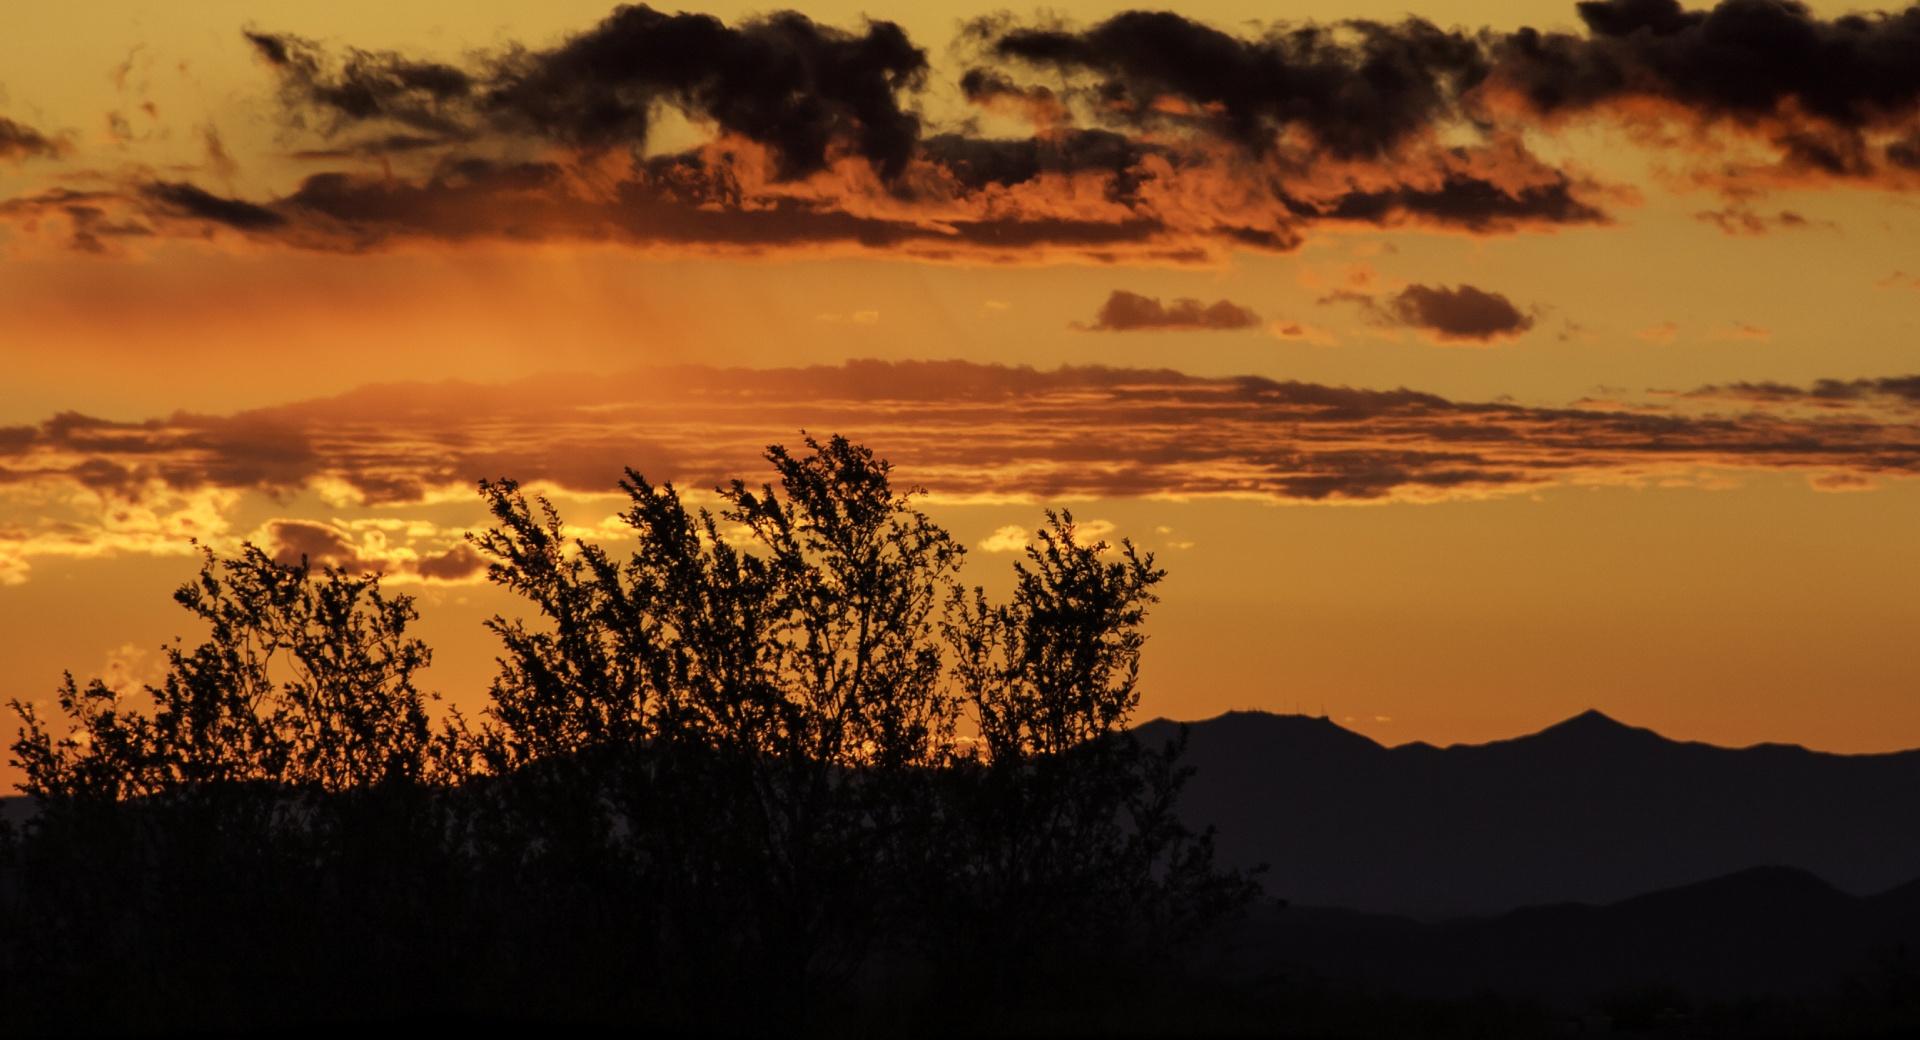 Arizona Sunset Panorama at 1280 x 960 size wallpapers HD quality